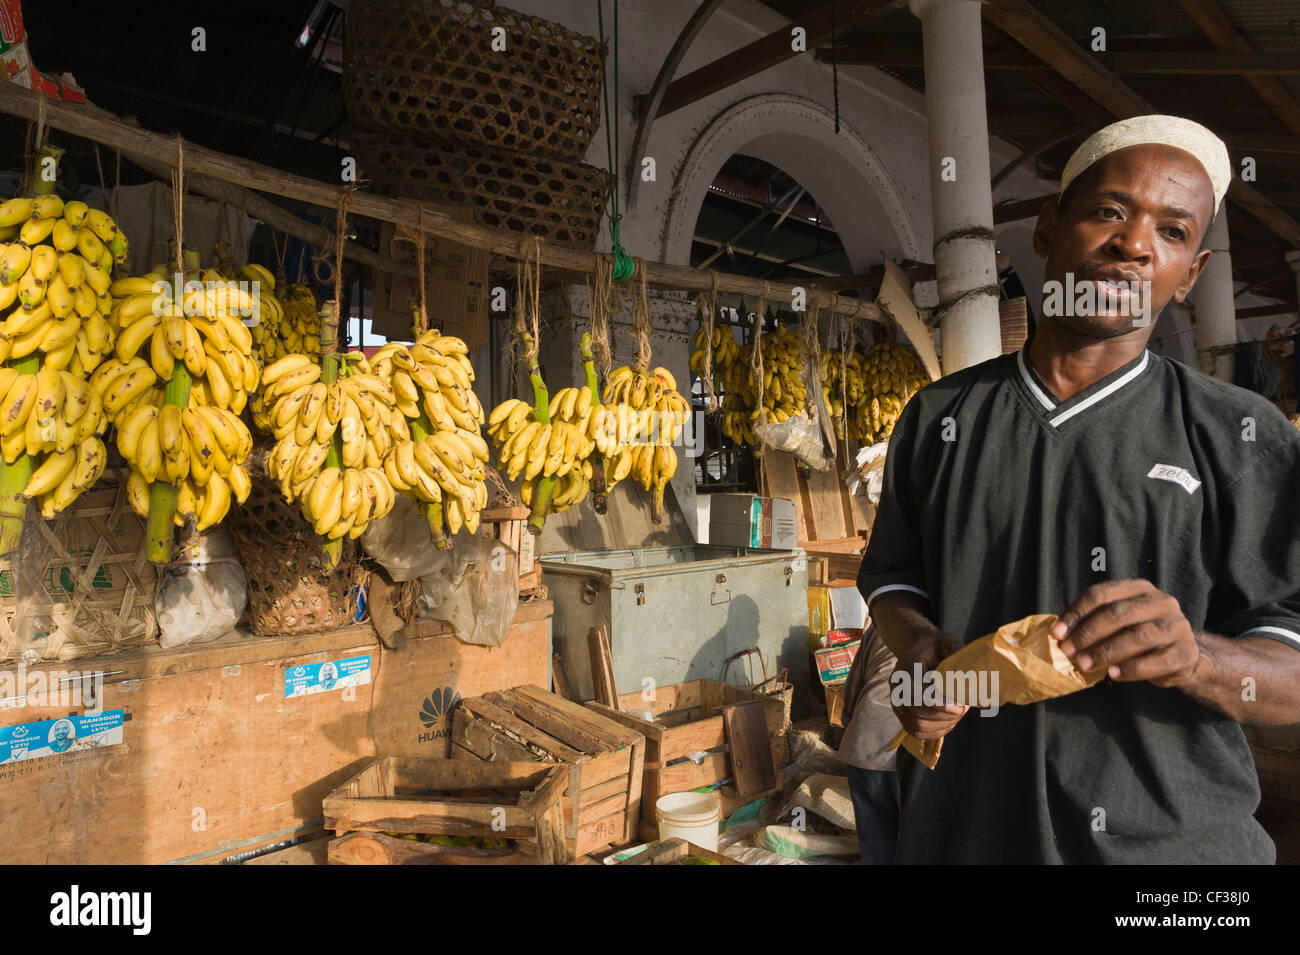 Man selling bananas Stone Town Zanzibar Tanzania Stock Photo